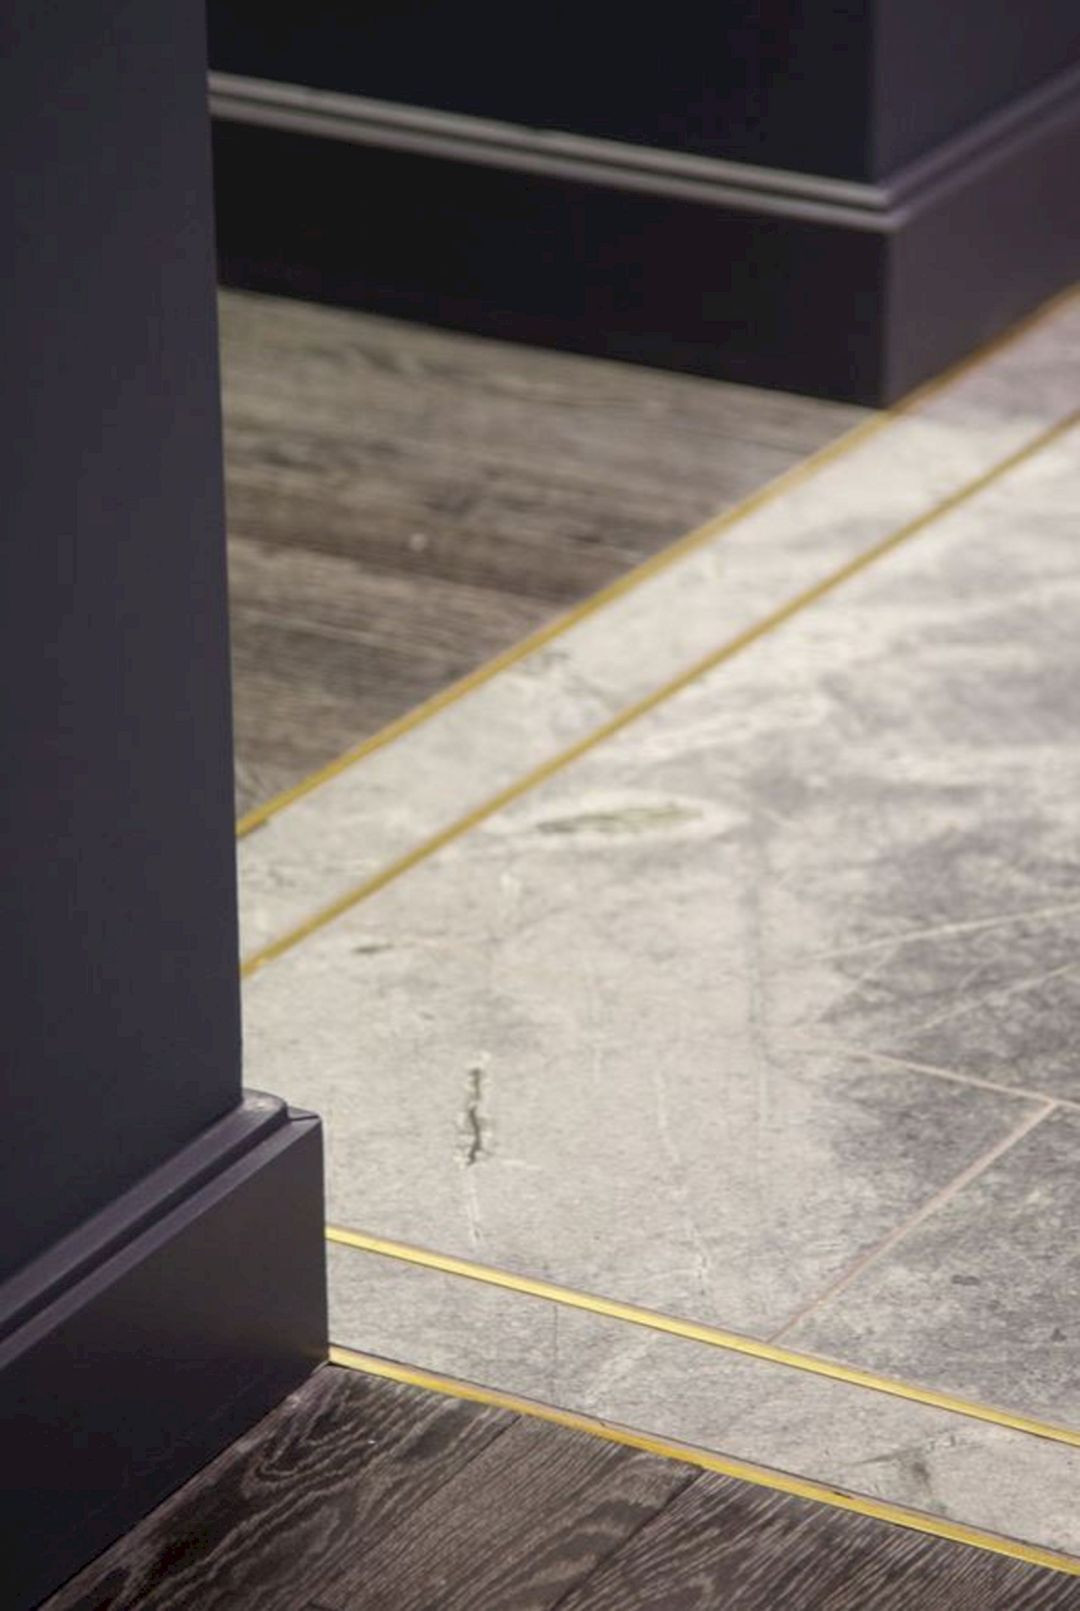 hardwood flooring grand junction co of pin by amanda watson on interior ideas inspiration pinterest in concrete wood floor stone flooring foyer flooring metal floor metal trim